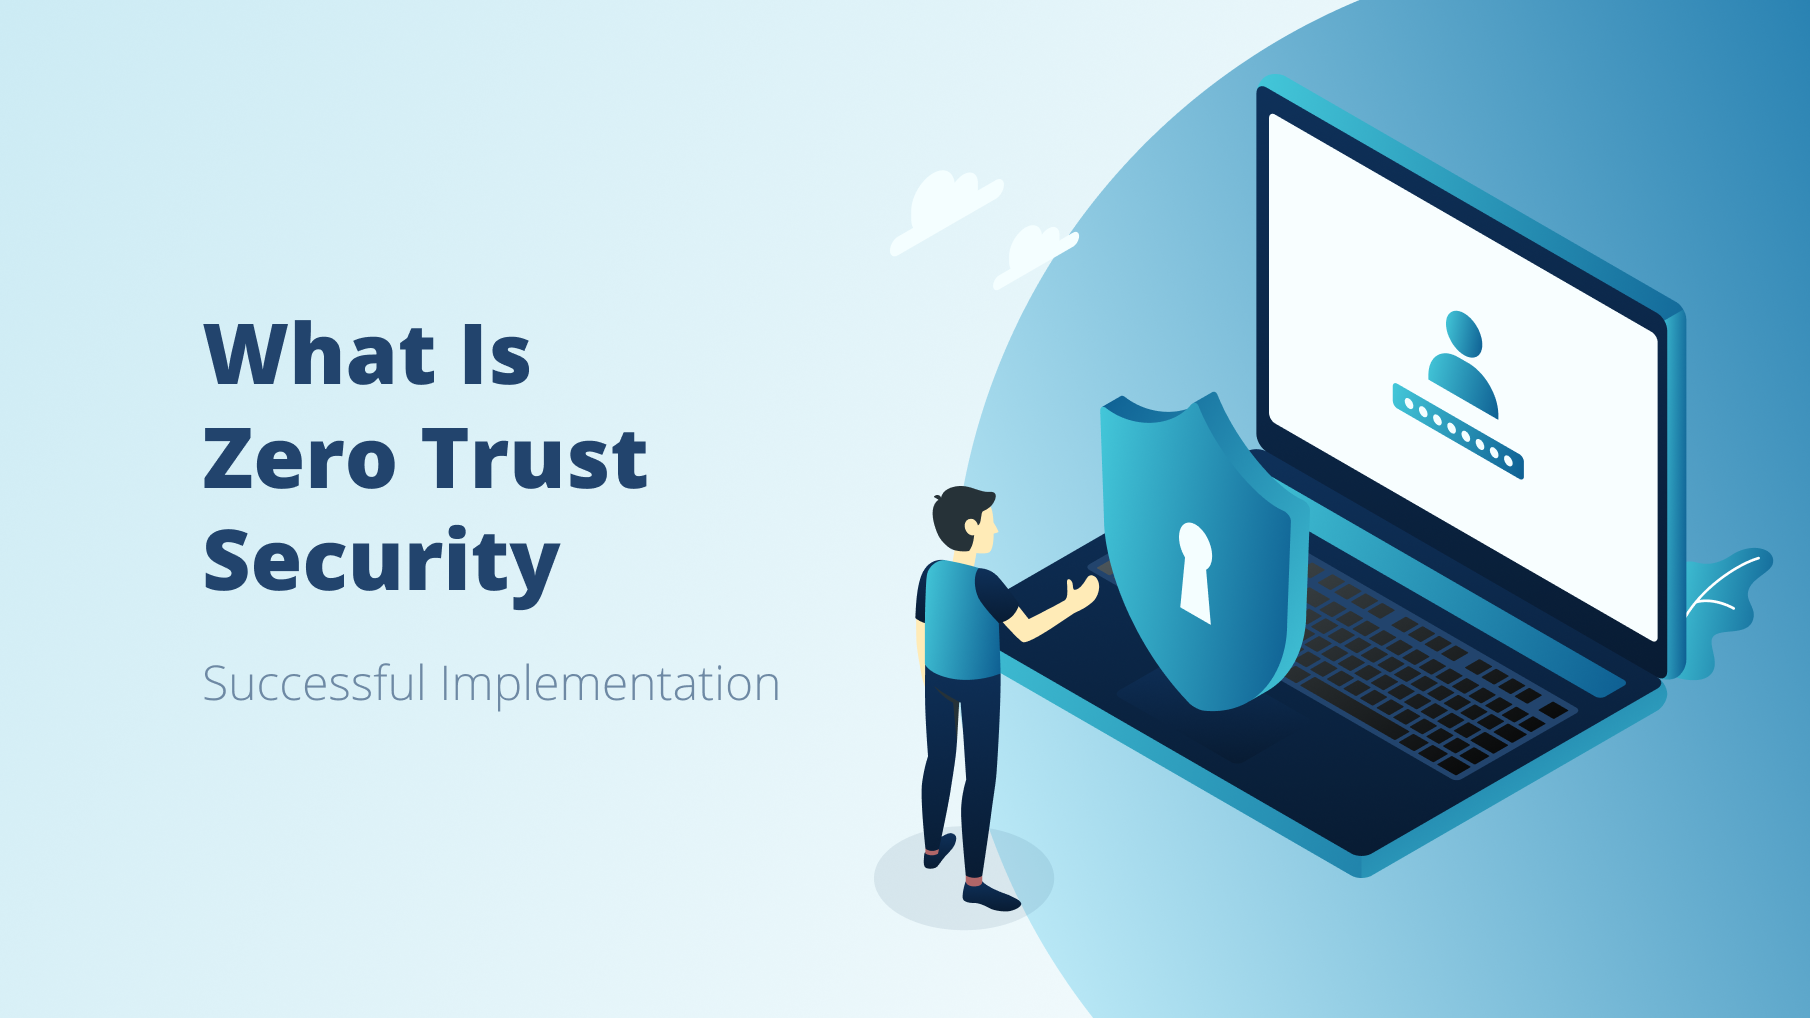 Zero trust security implementation